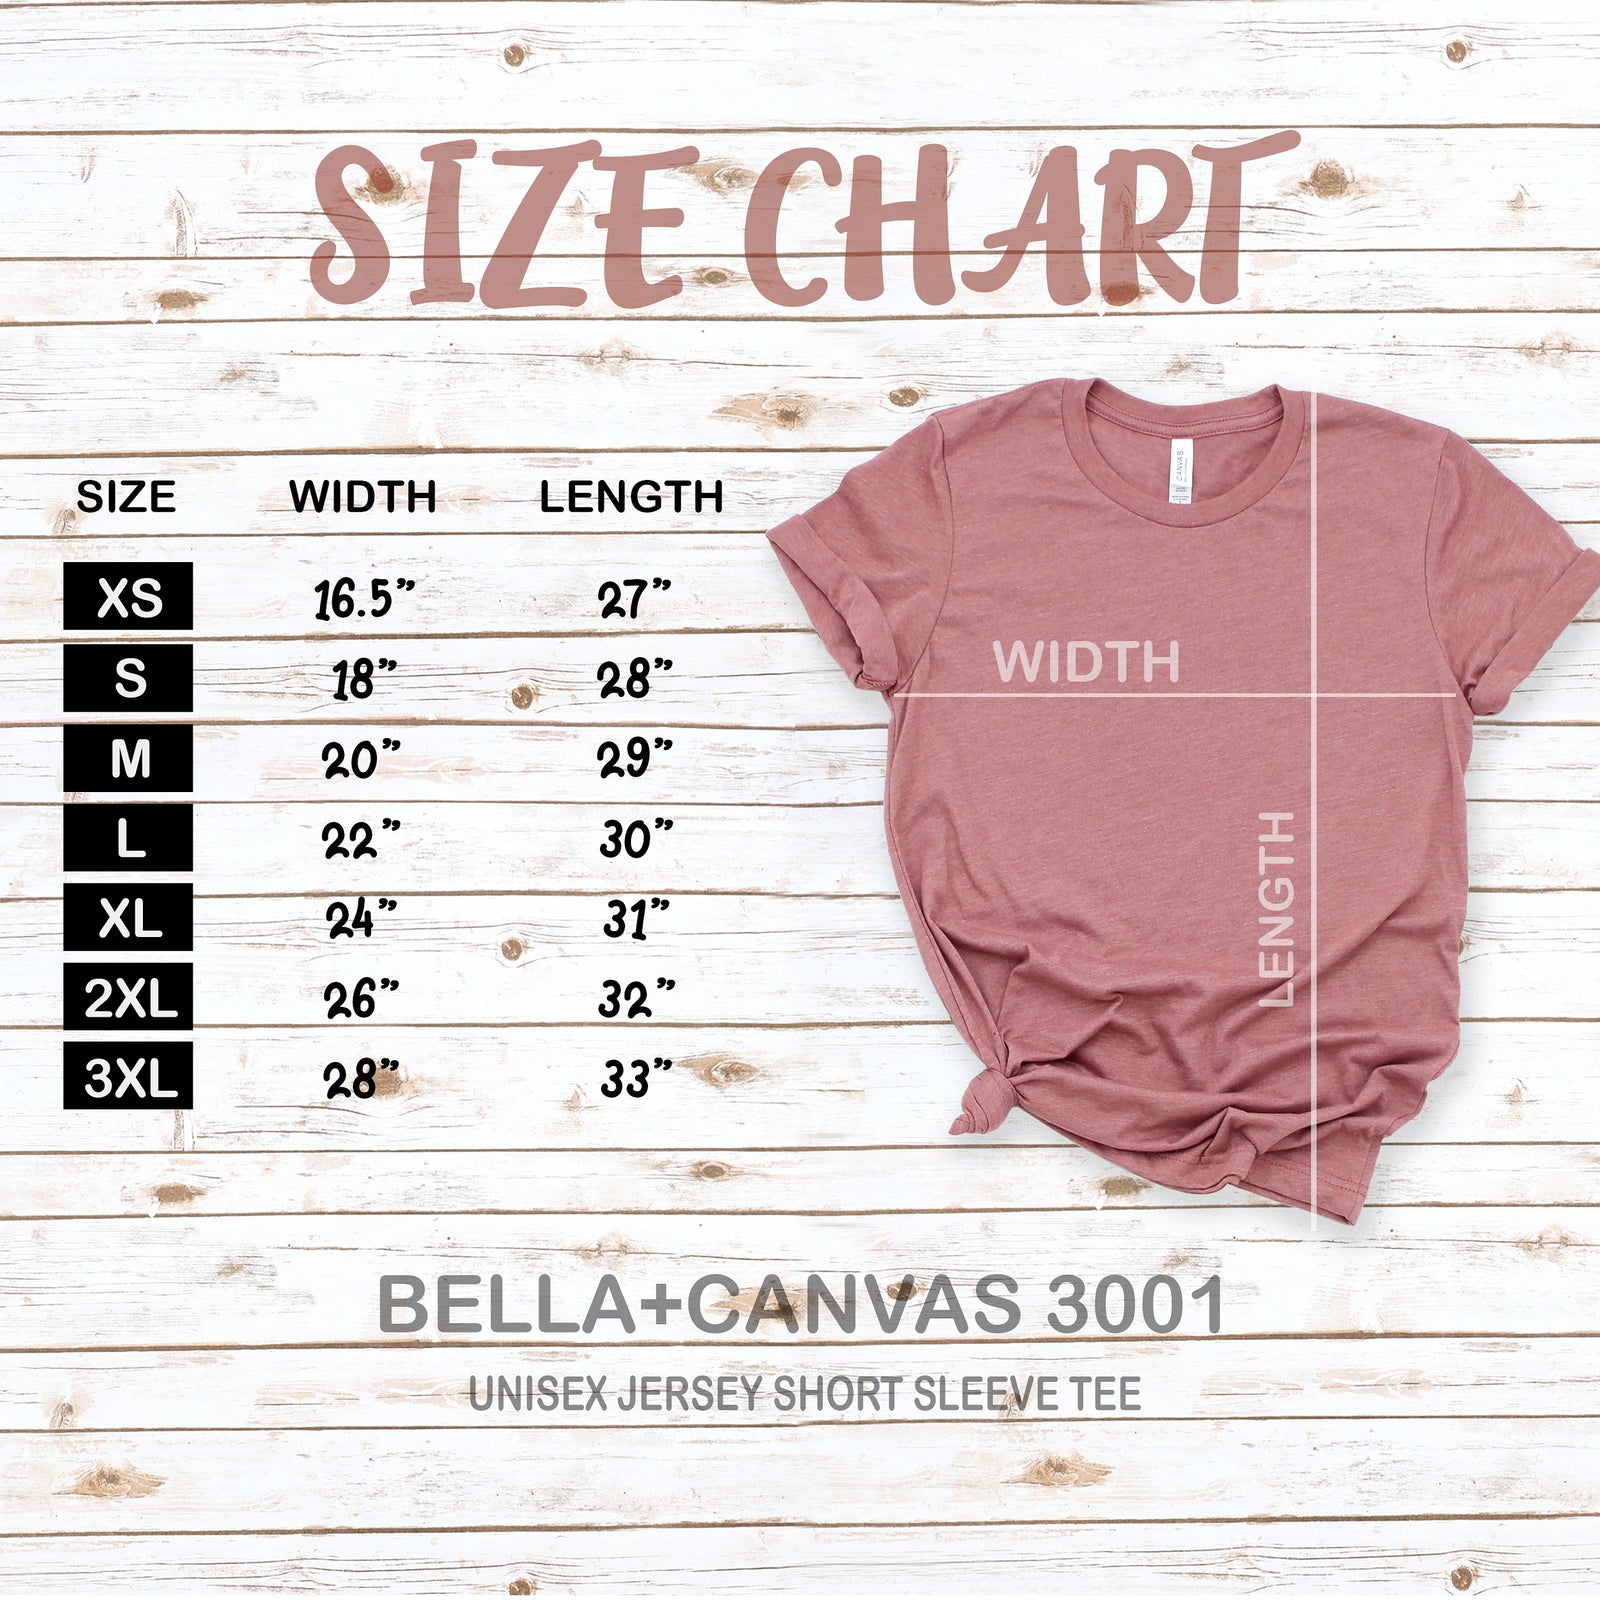 Bella and Canvas Unisex Crew Neck Shirts - 3001 - Blanks - DIY - Plain - No Design - HTV - Screen Print